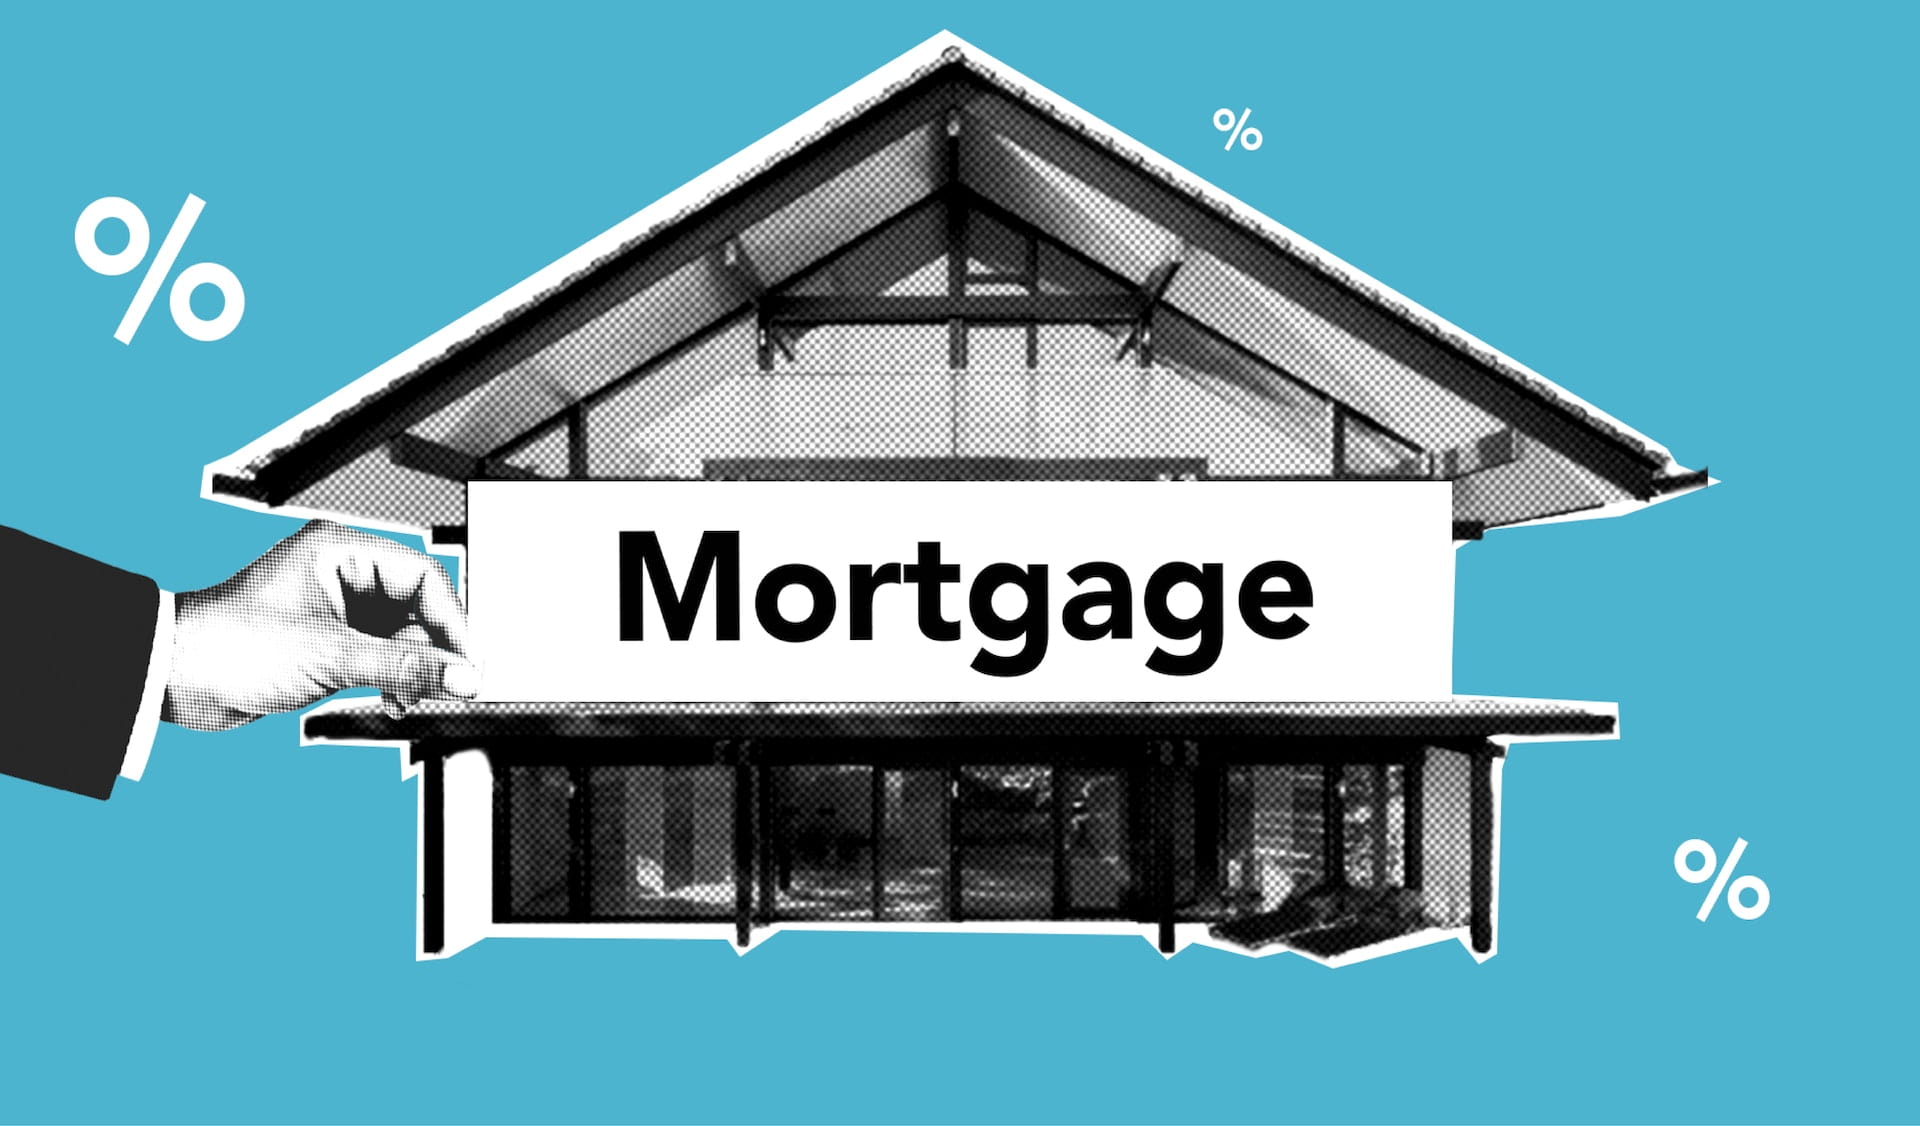 Adjustable-rate mortgage